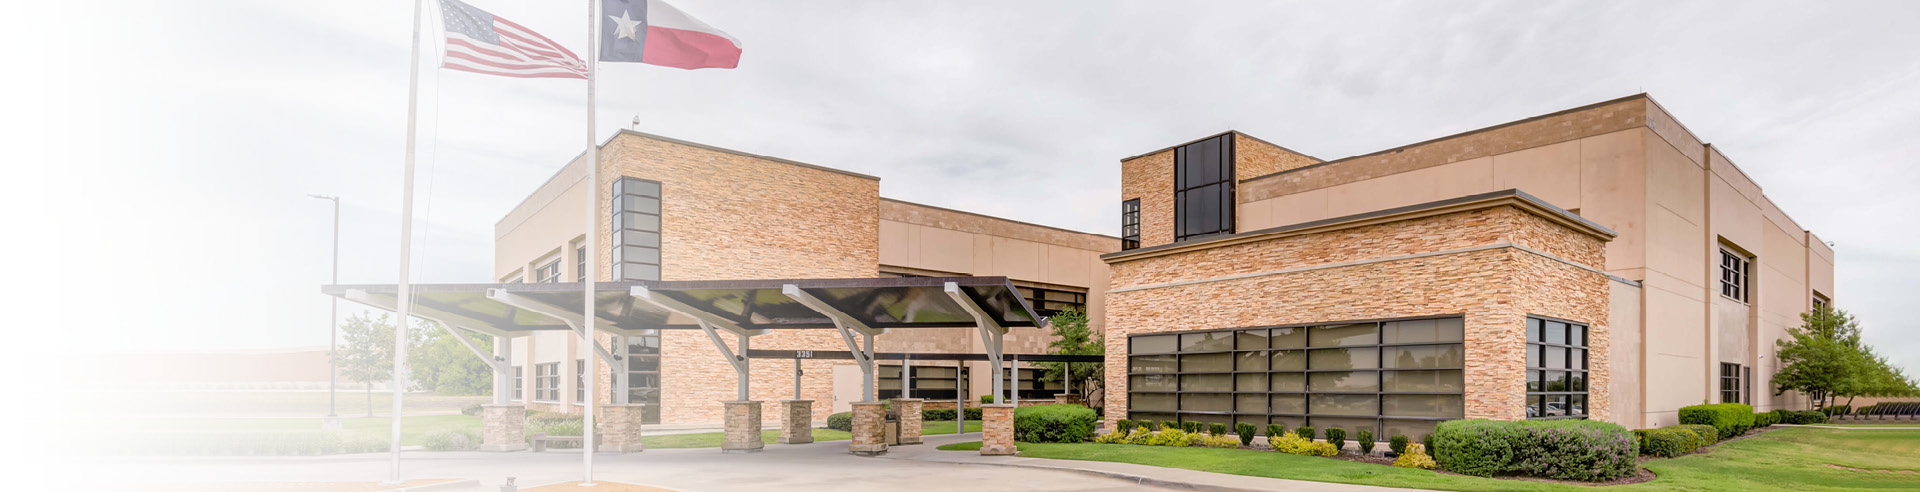 Encompass Health Rehabilitation Hospital of Richardson exterior